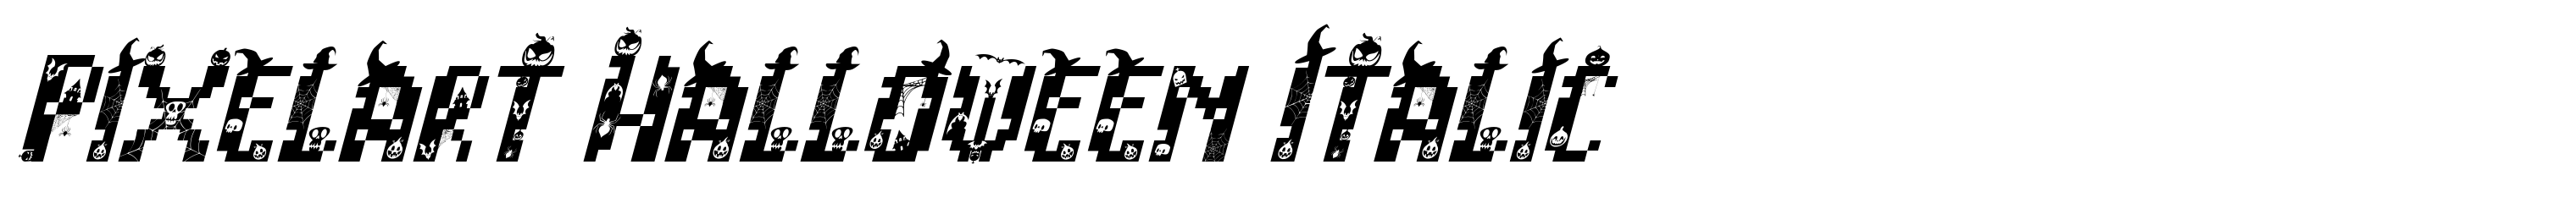 Pixelart Halloween Italic